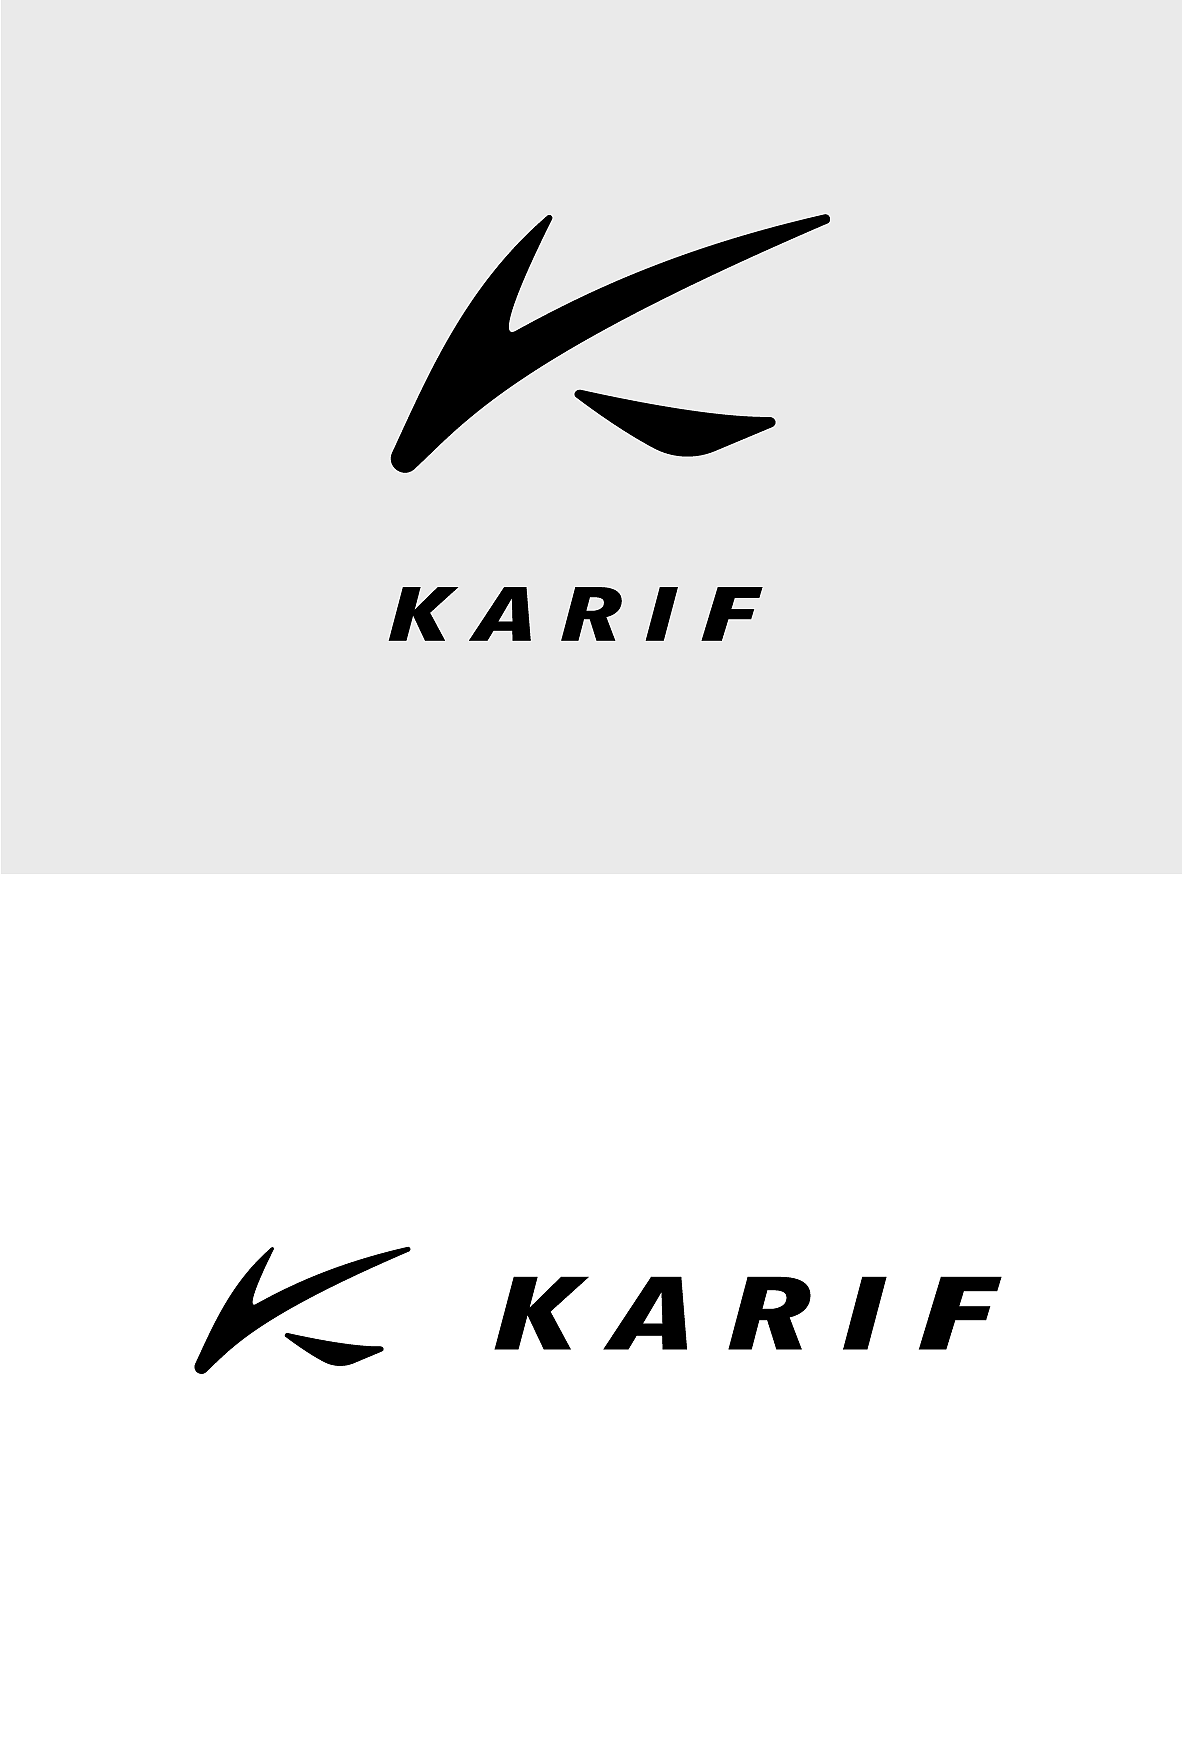 karif运动健身品牌logo设计